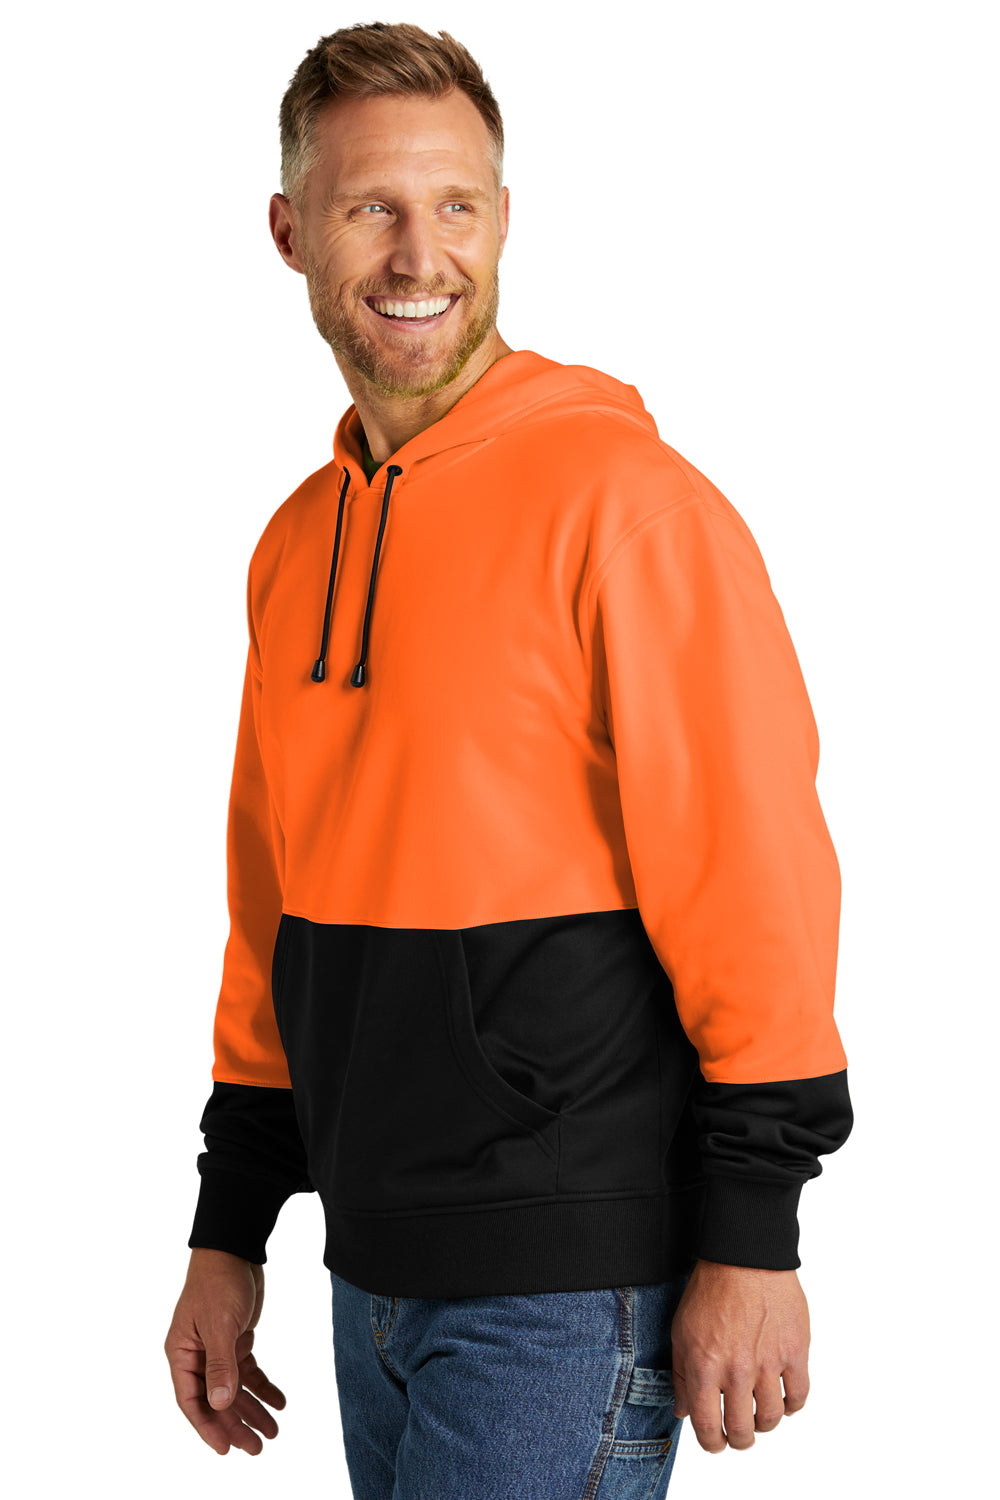 CornerStone CSF01 Enhanced Visibility Fleece Hooded Sweatshirt Hoodie Safety Orange 3Q